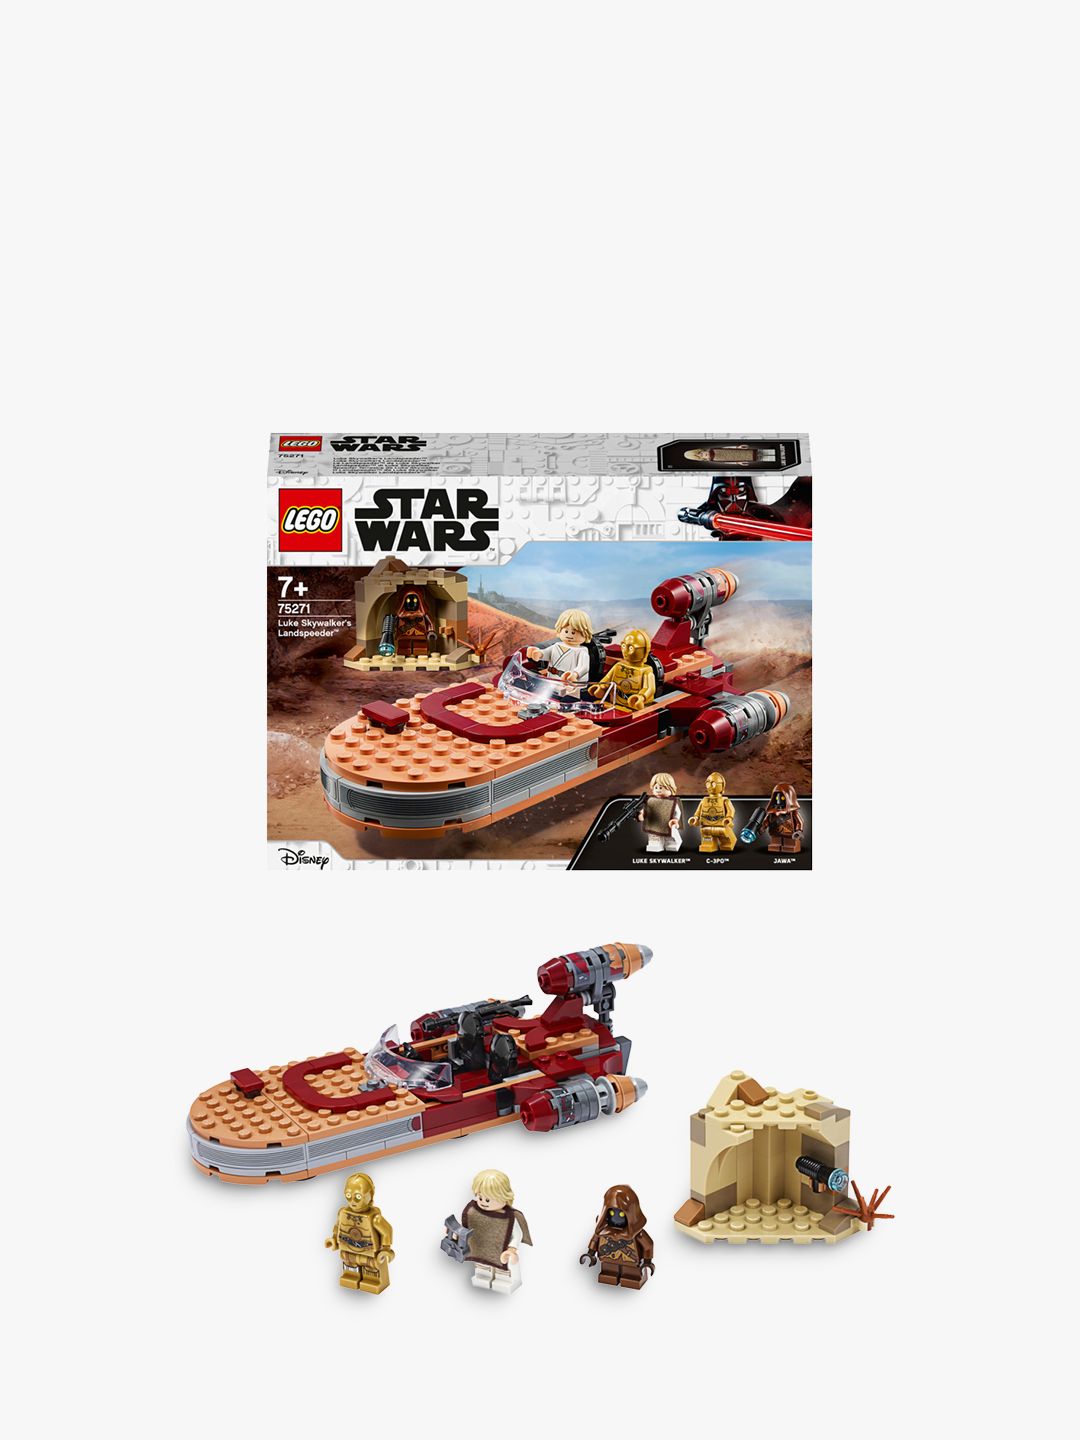 LEGO Star Wars 75271 Luke Skywalker's Landspeeder at John Lewis & Partners